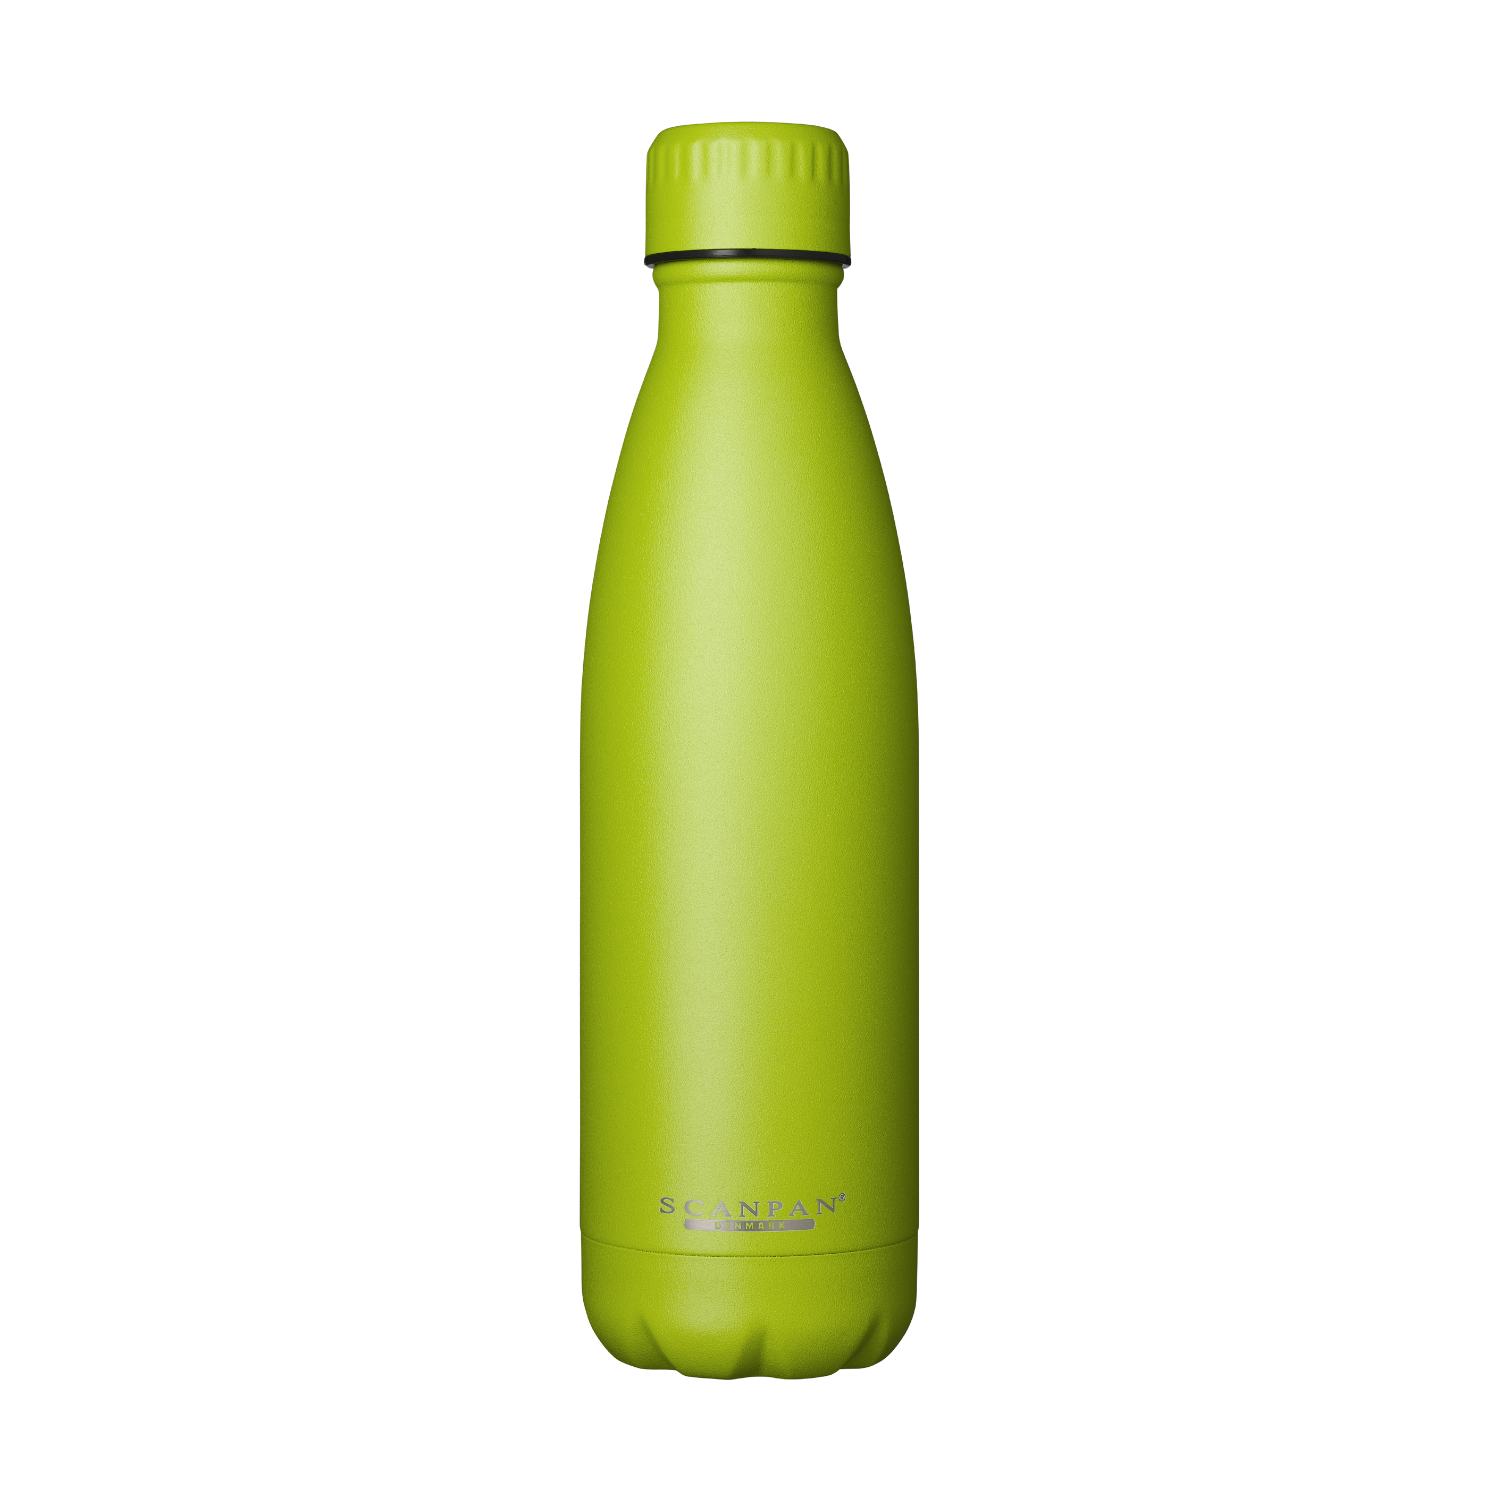 SCANPAN NEW To Go 500ml Bottle - Lime Green